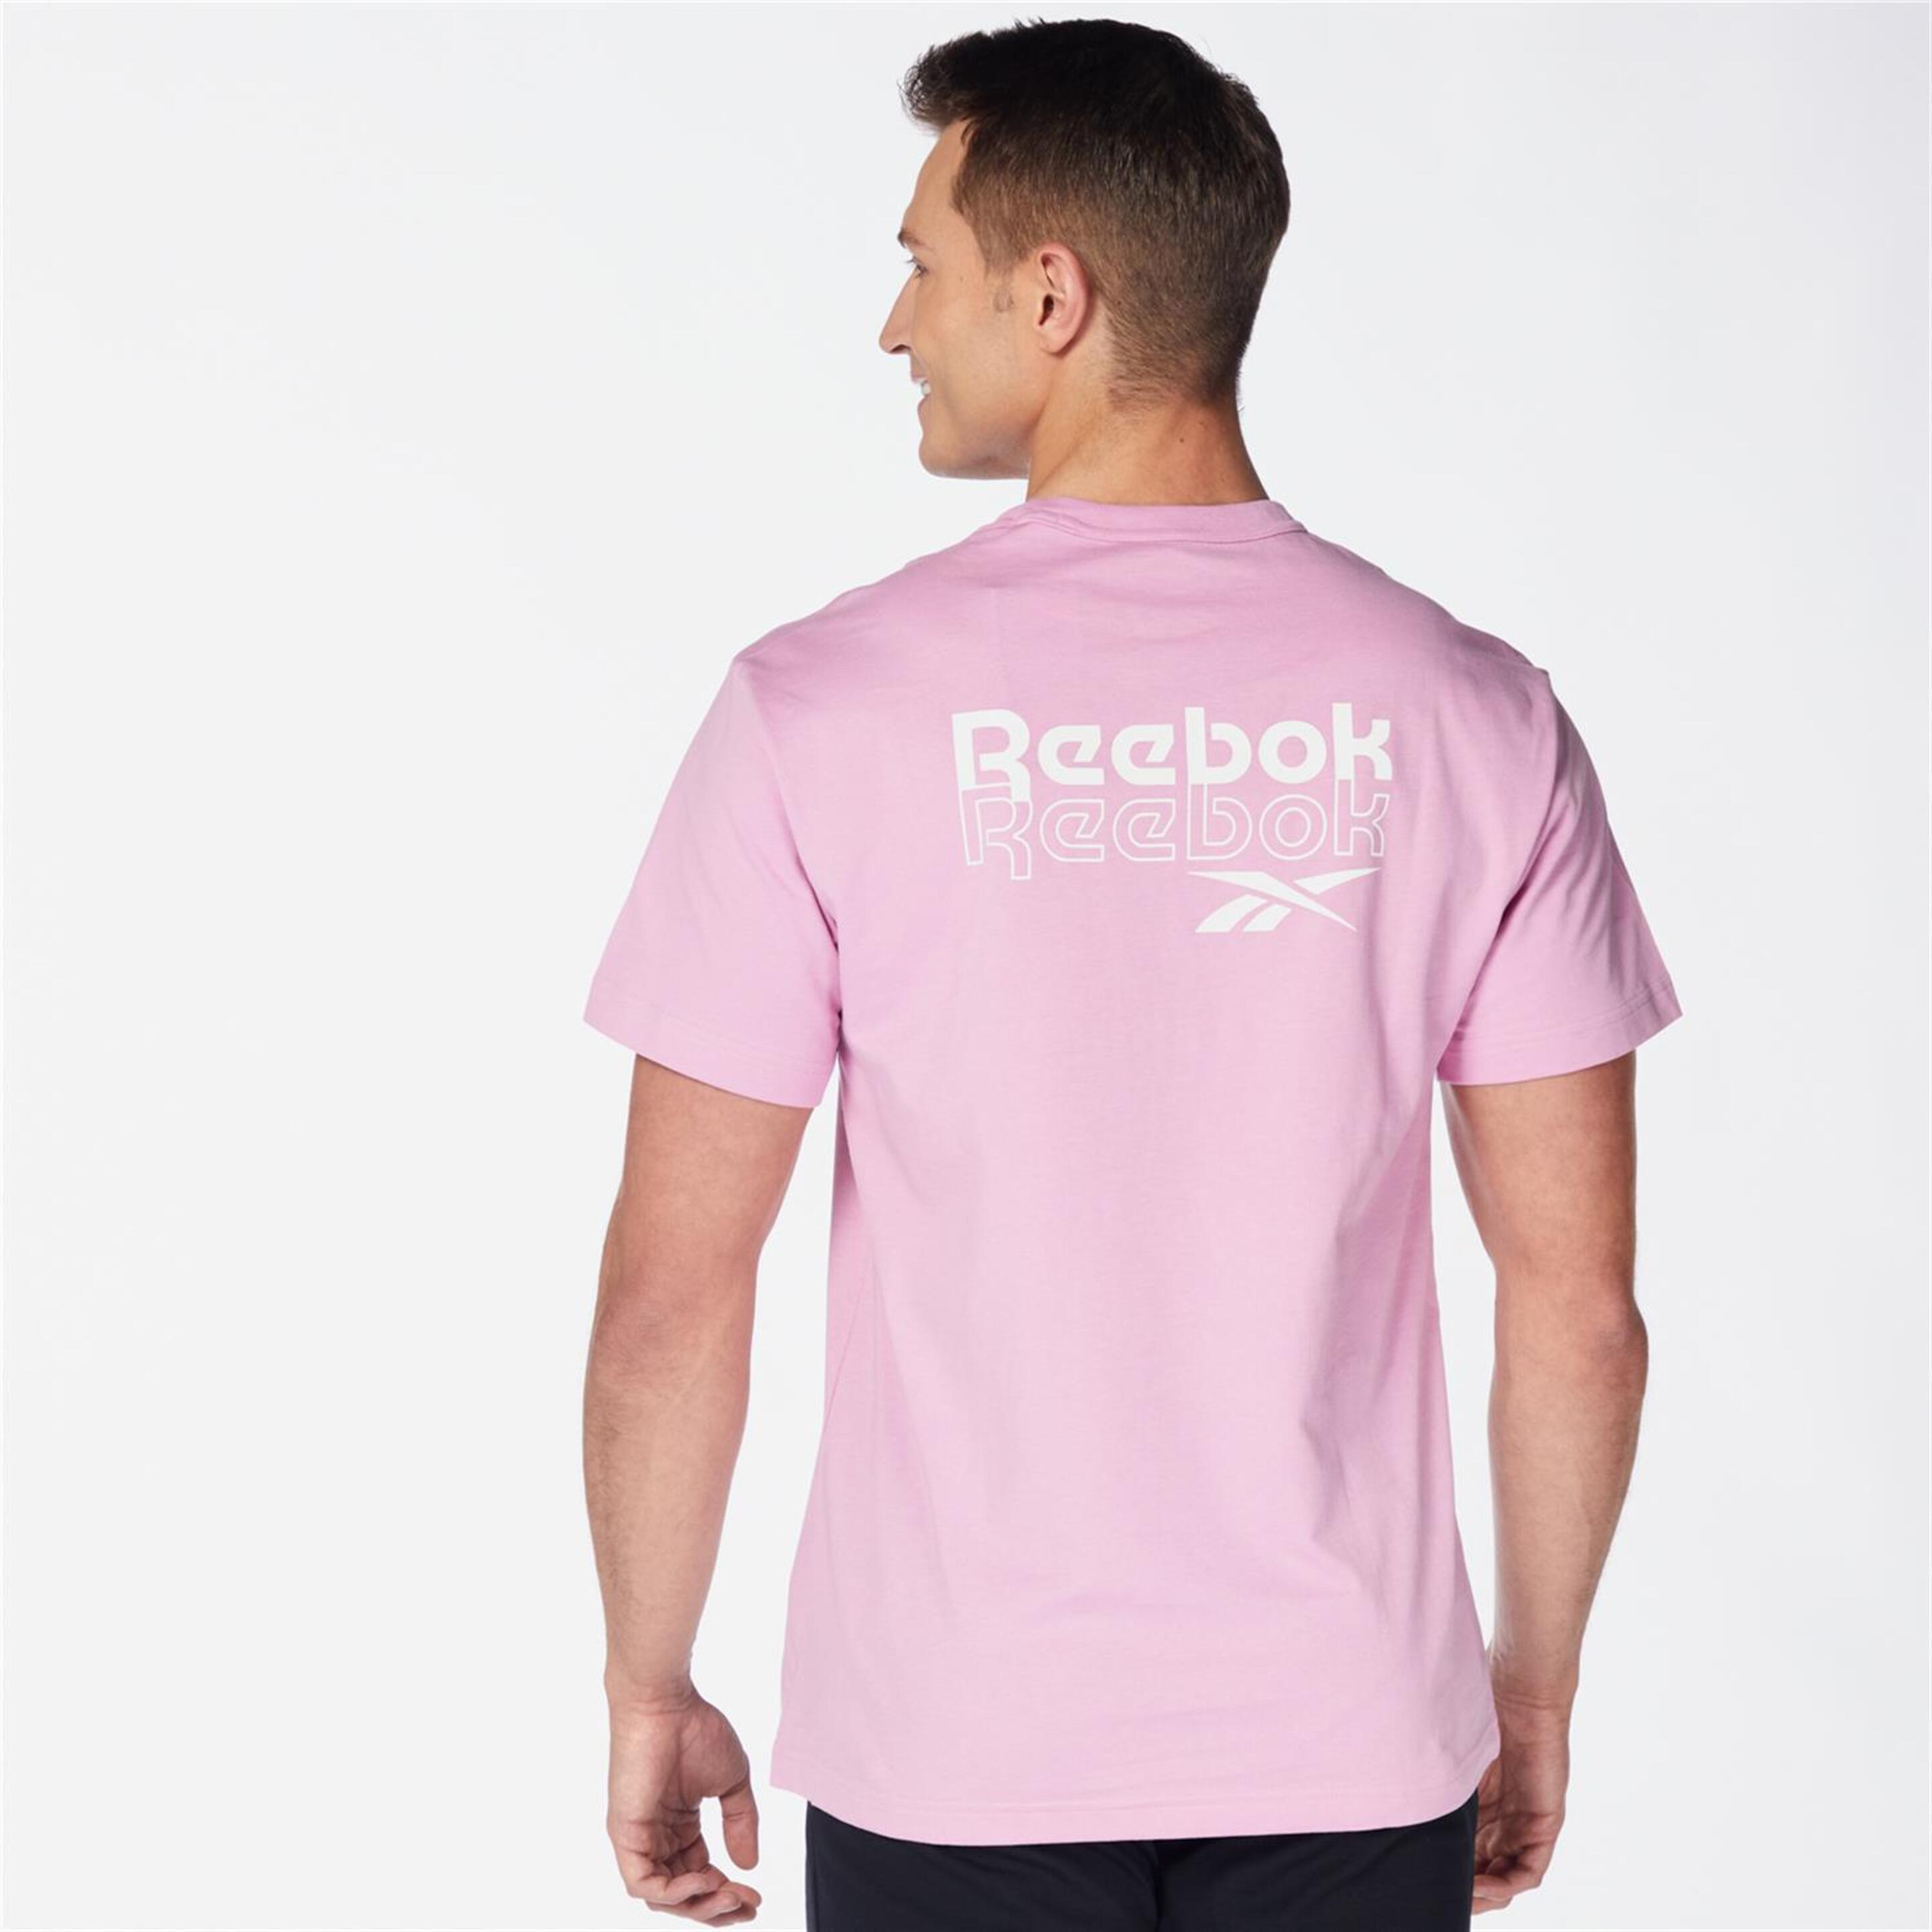 Reebok Ri - Rosa - Camiseta Hombre